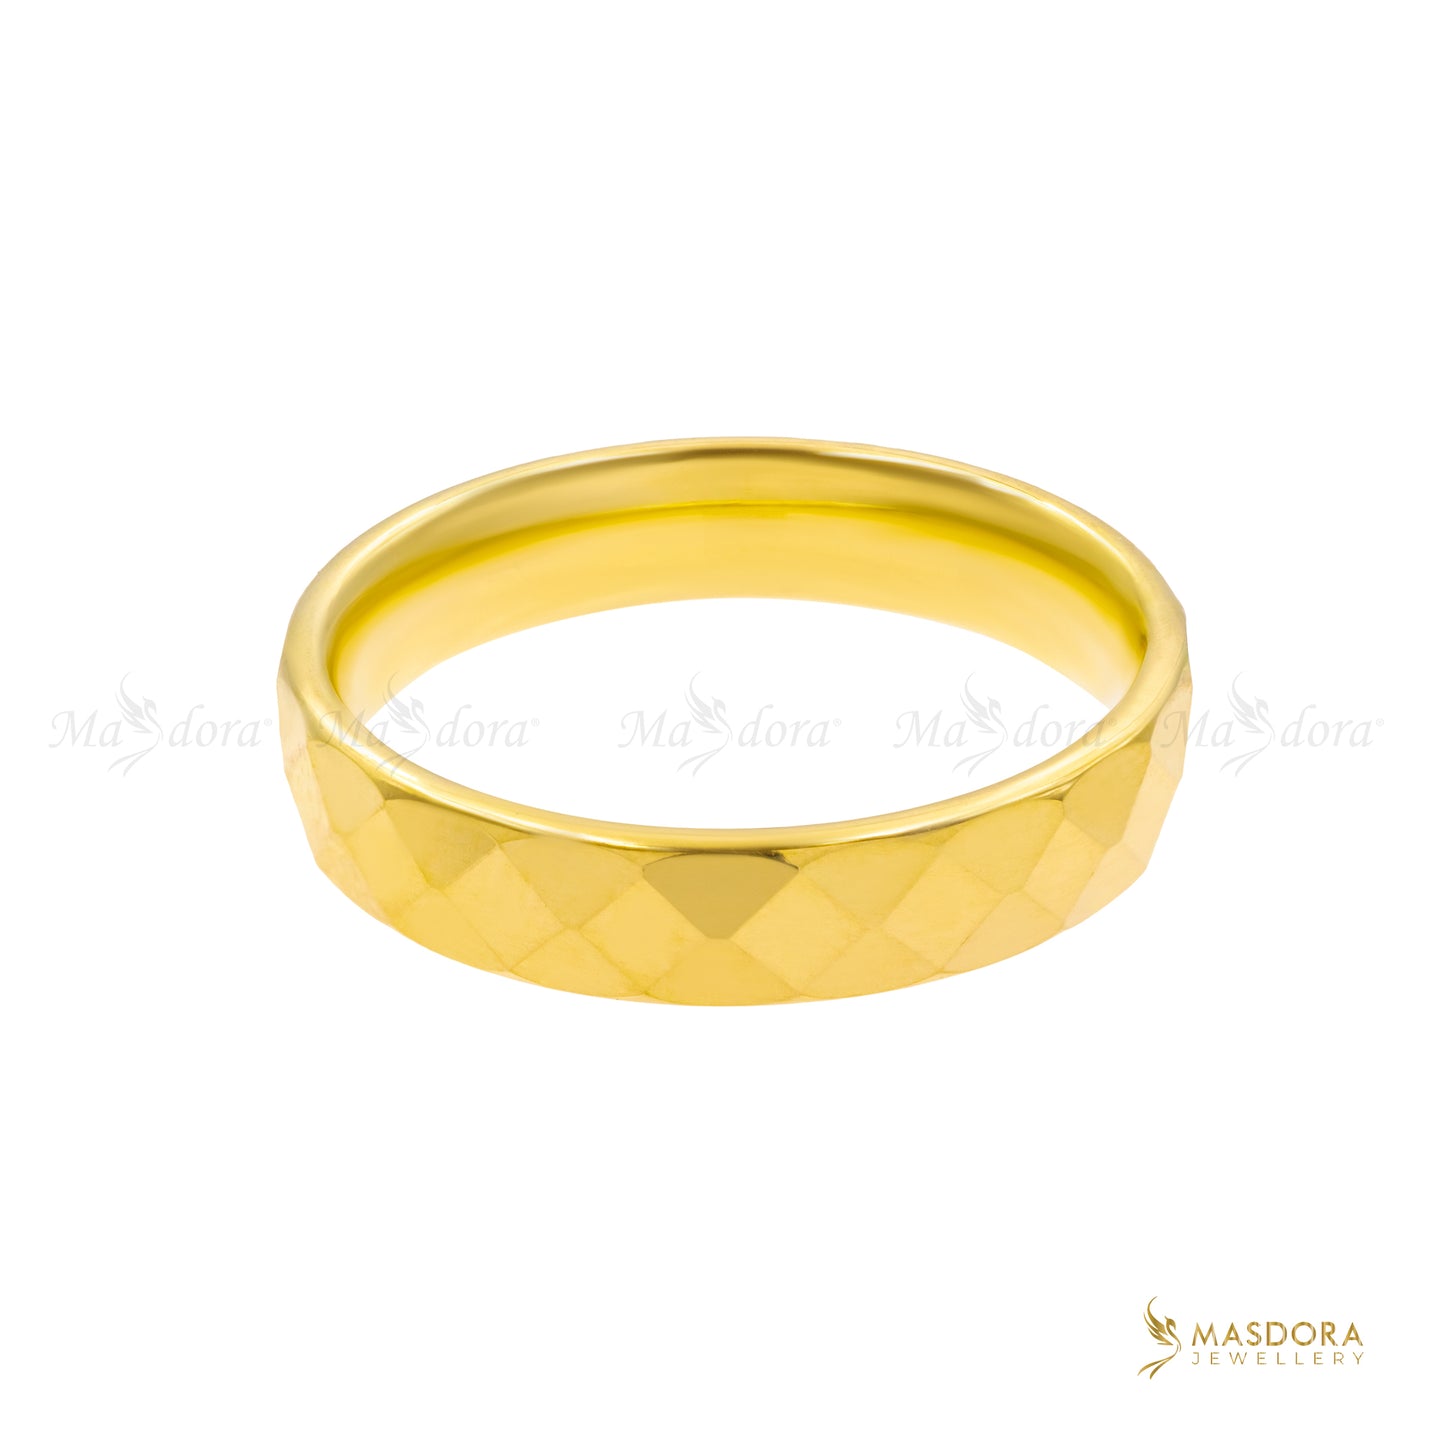 Cincin Emas Masdora Emirates Star Leena / Masdora Emirates Star Leena Gold Ring (Emas 916)